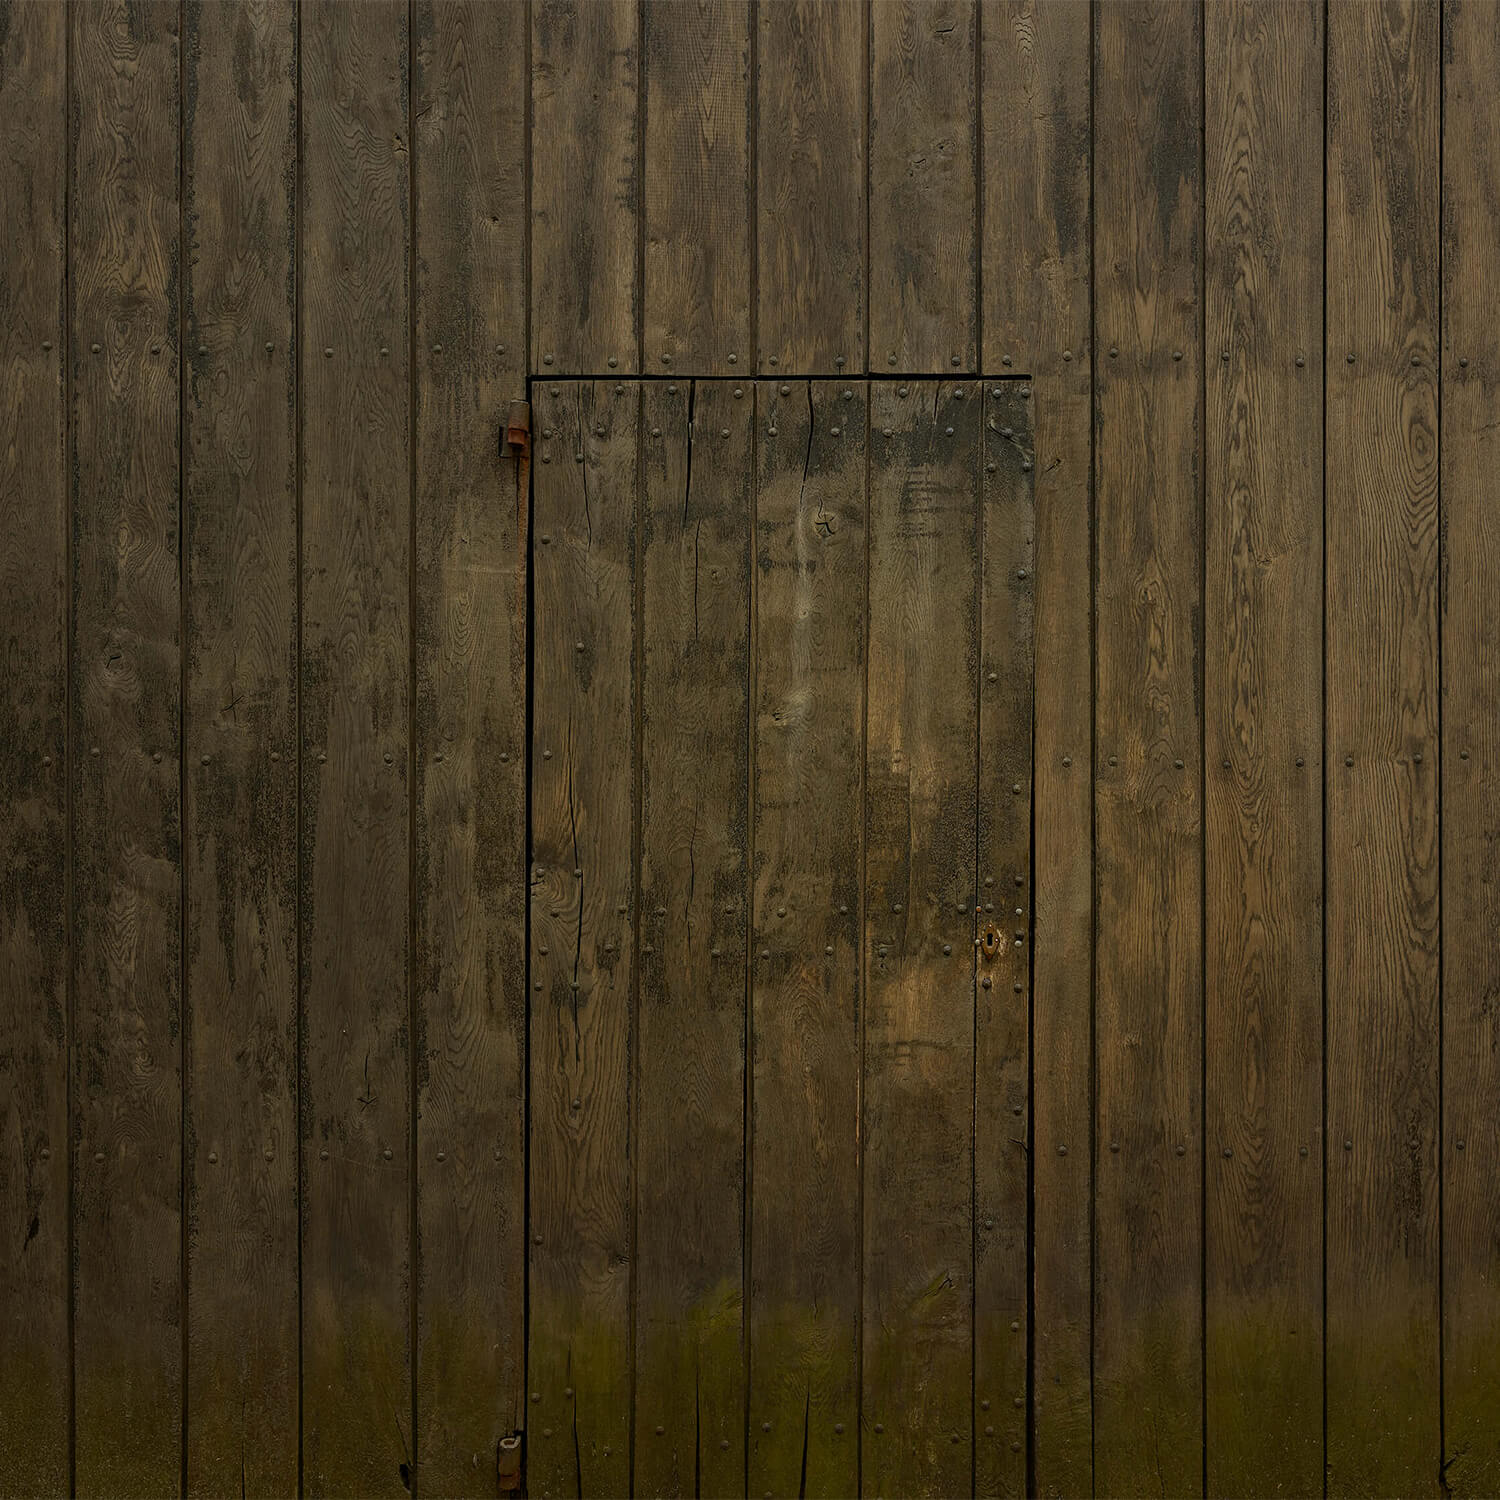 Mur en bois avec porte